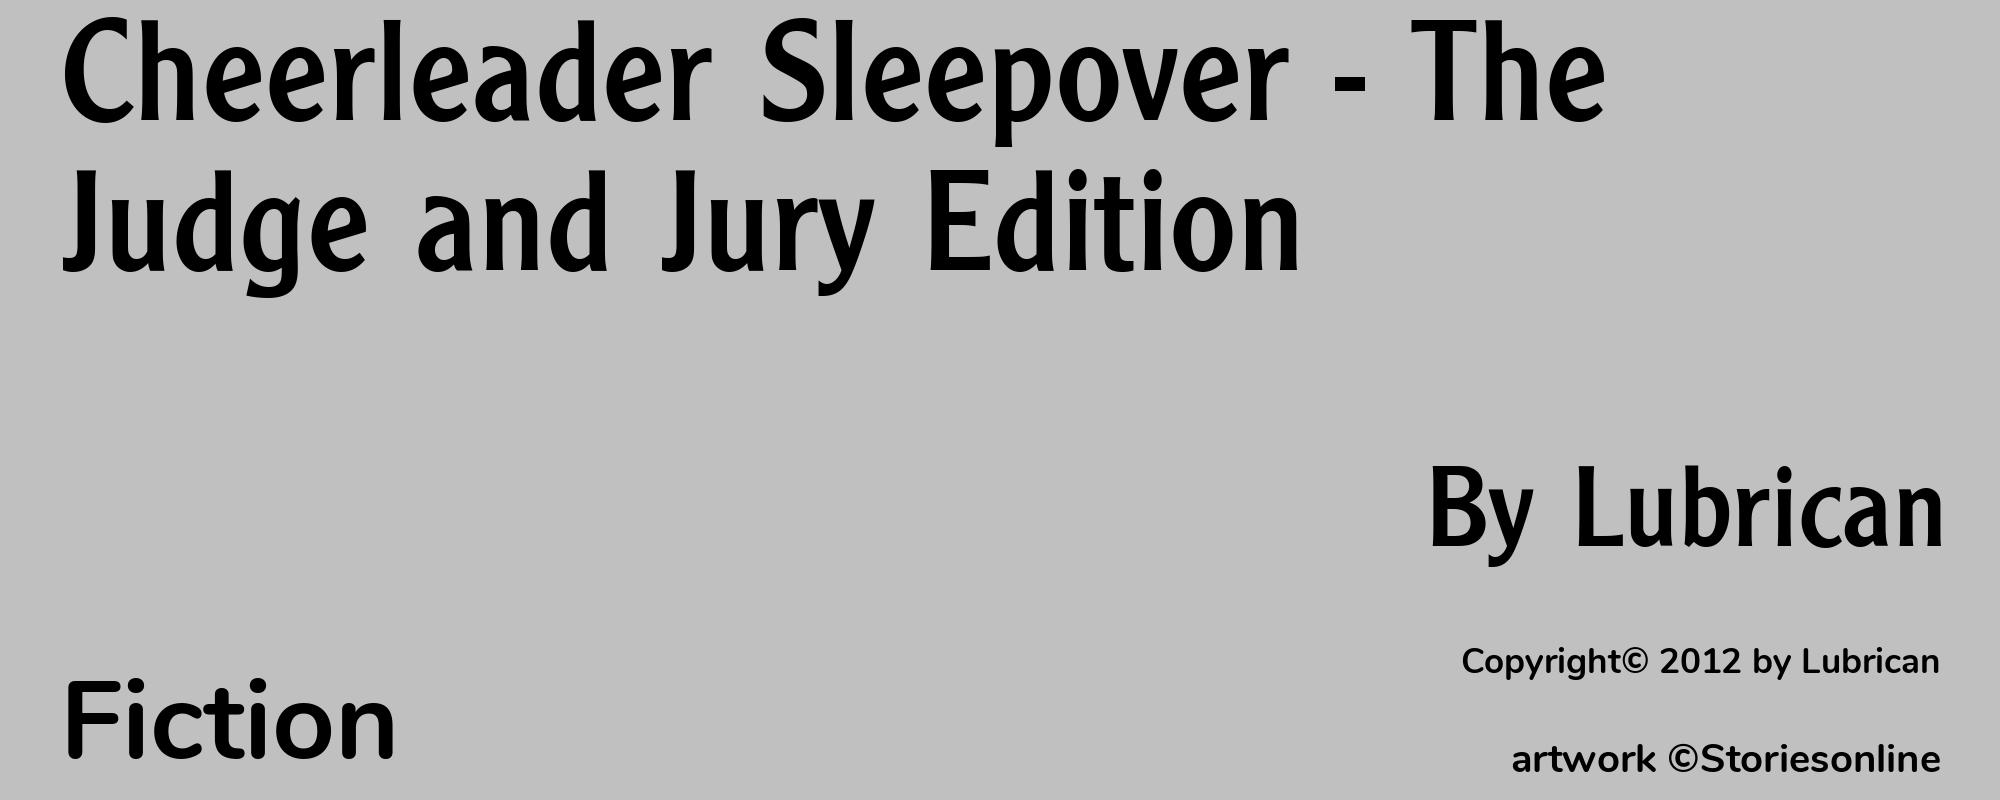 Cheerleader Sleepover - The Judge and Jury Edition - Cover